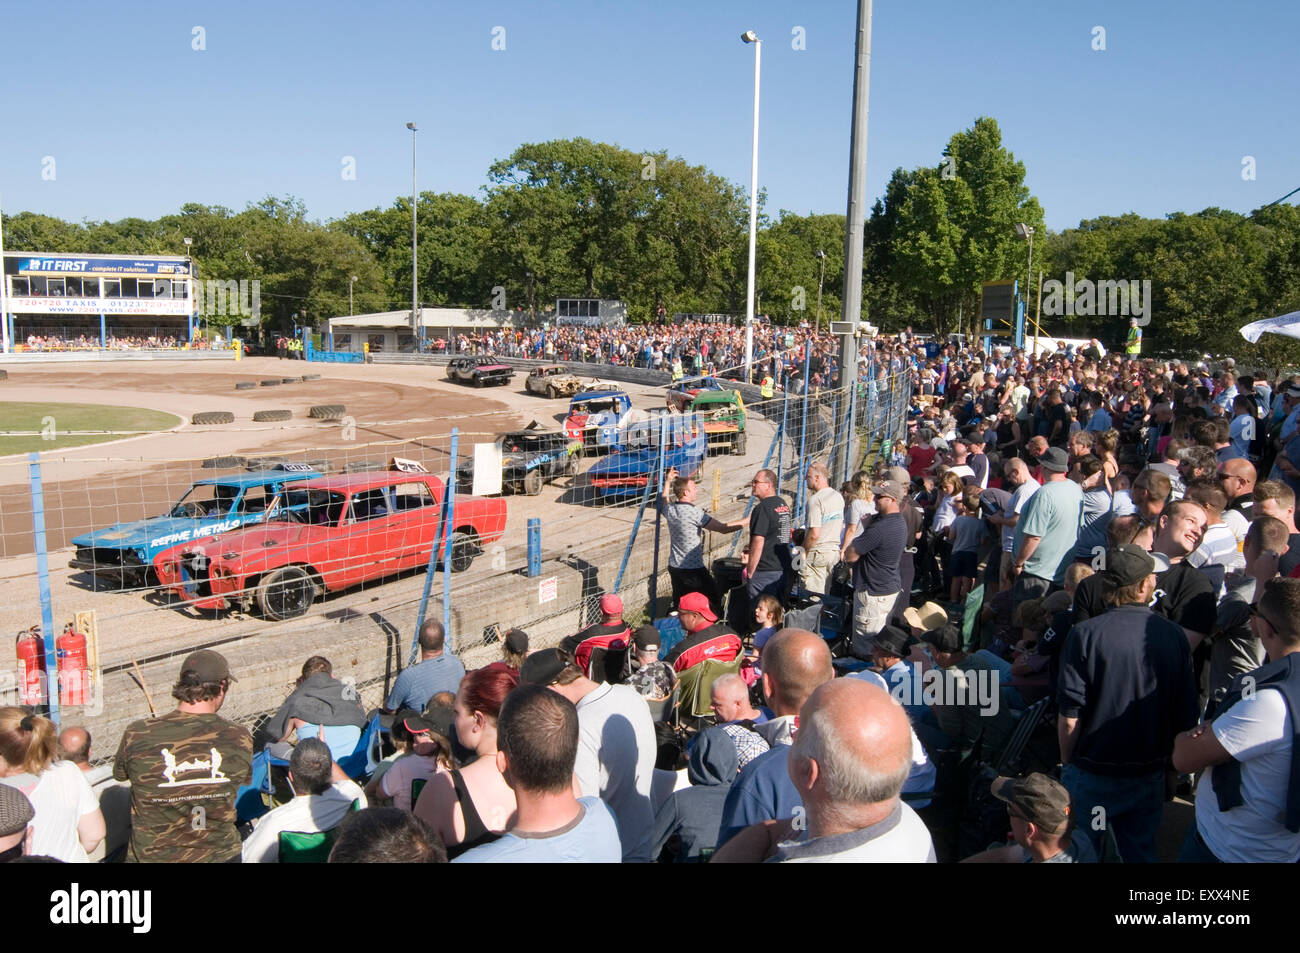 crowds of spectators at a banger race at Arlington speedway stadium near eastborne uk spectator motor sport demolition derby der Stock Photo